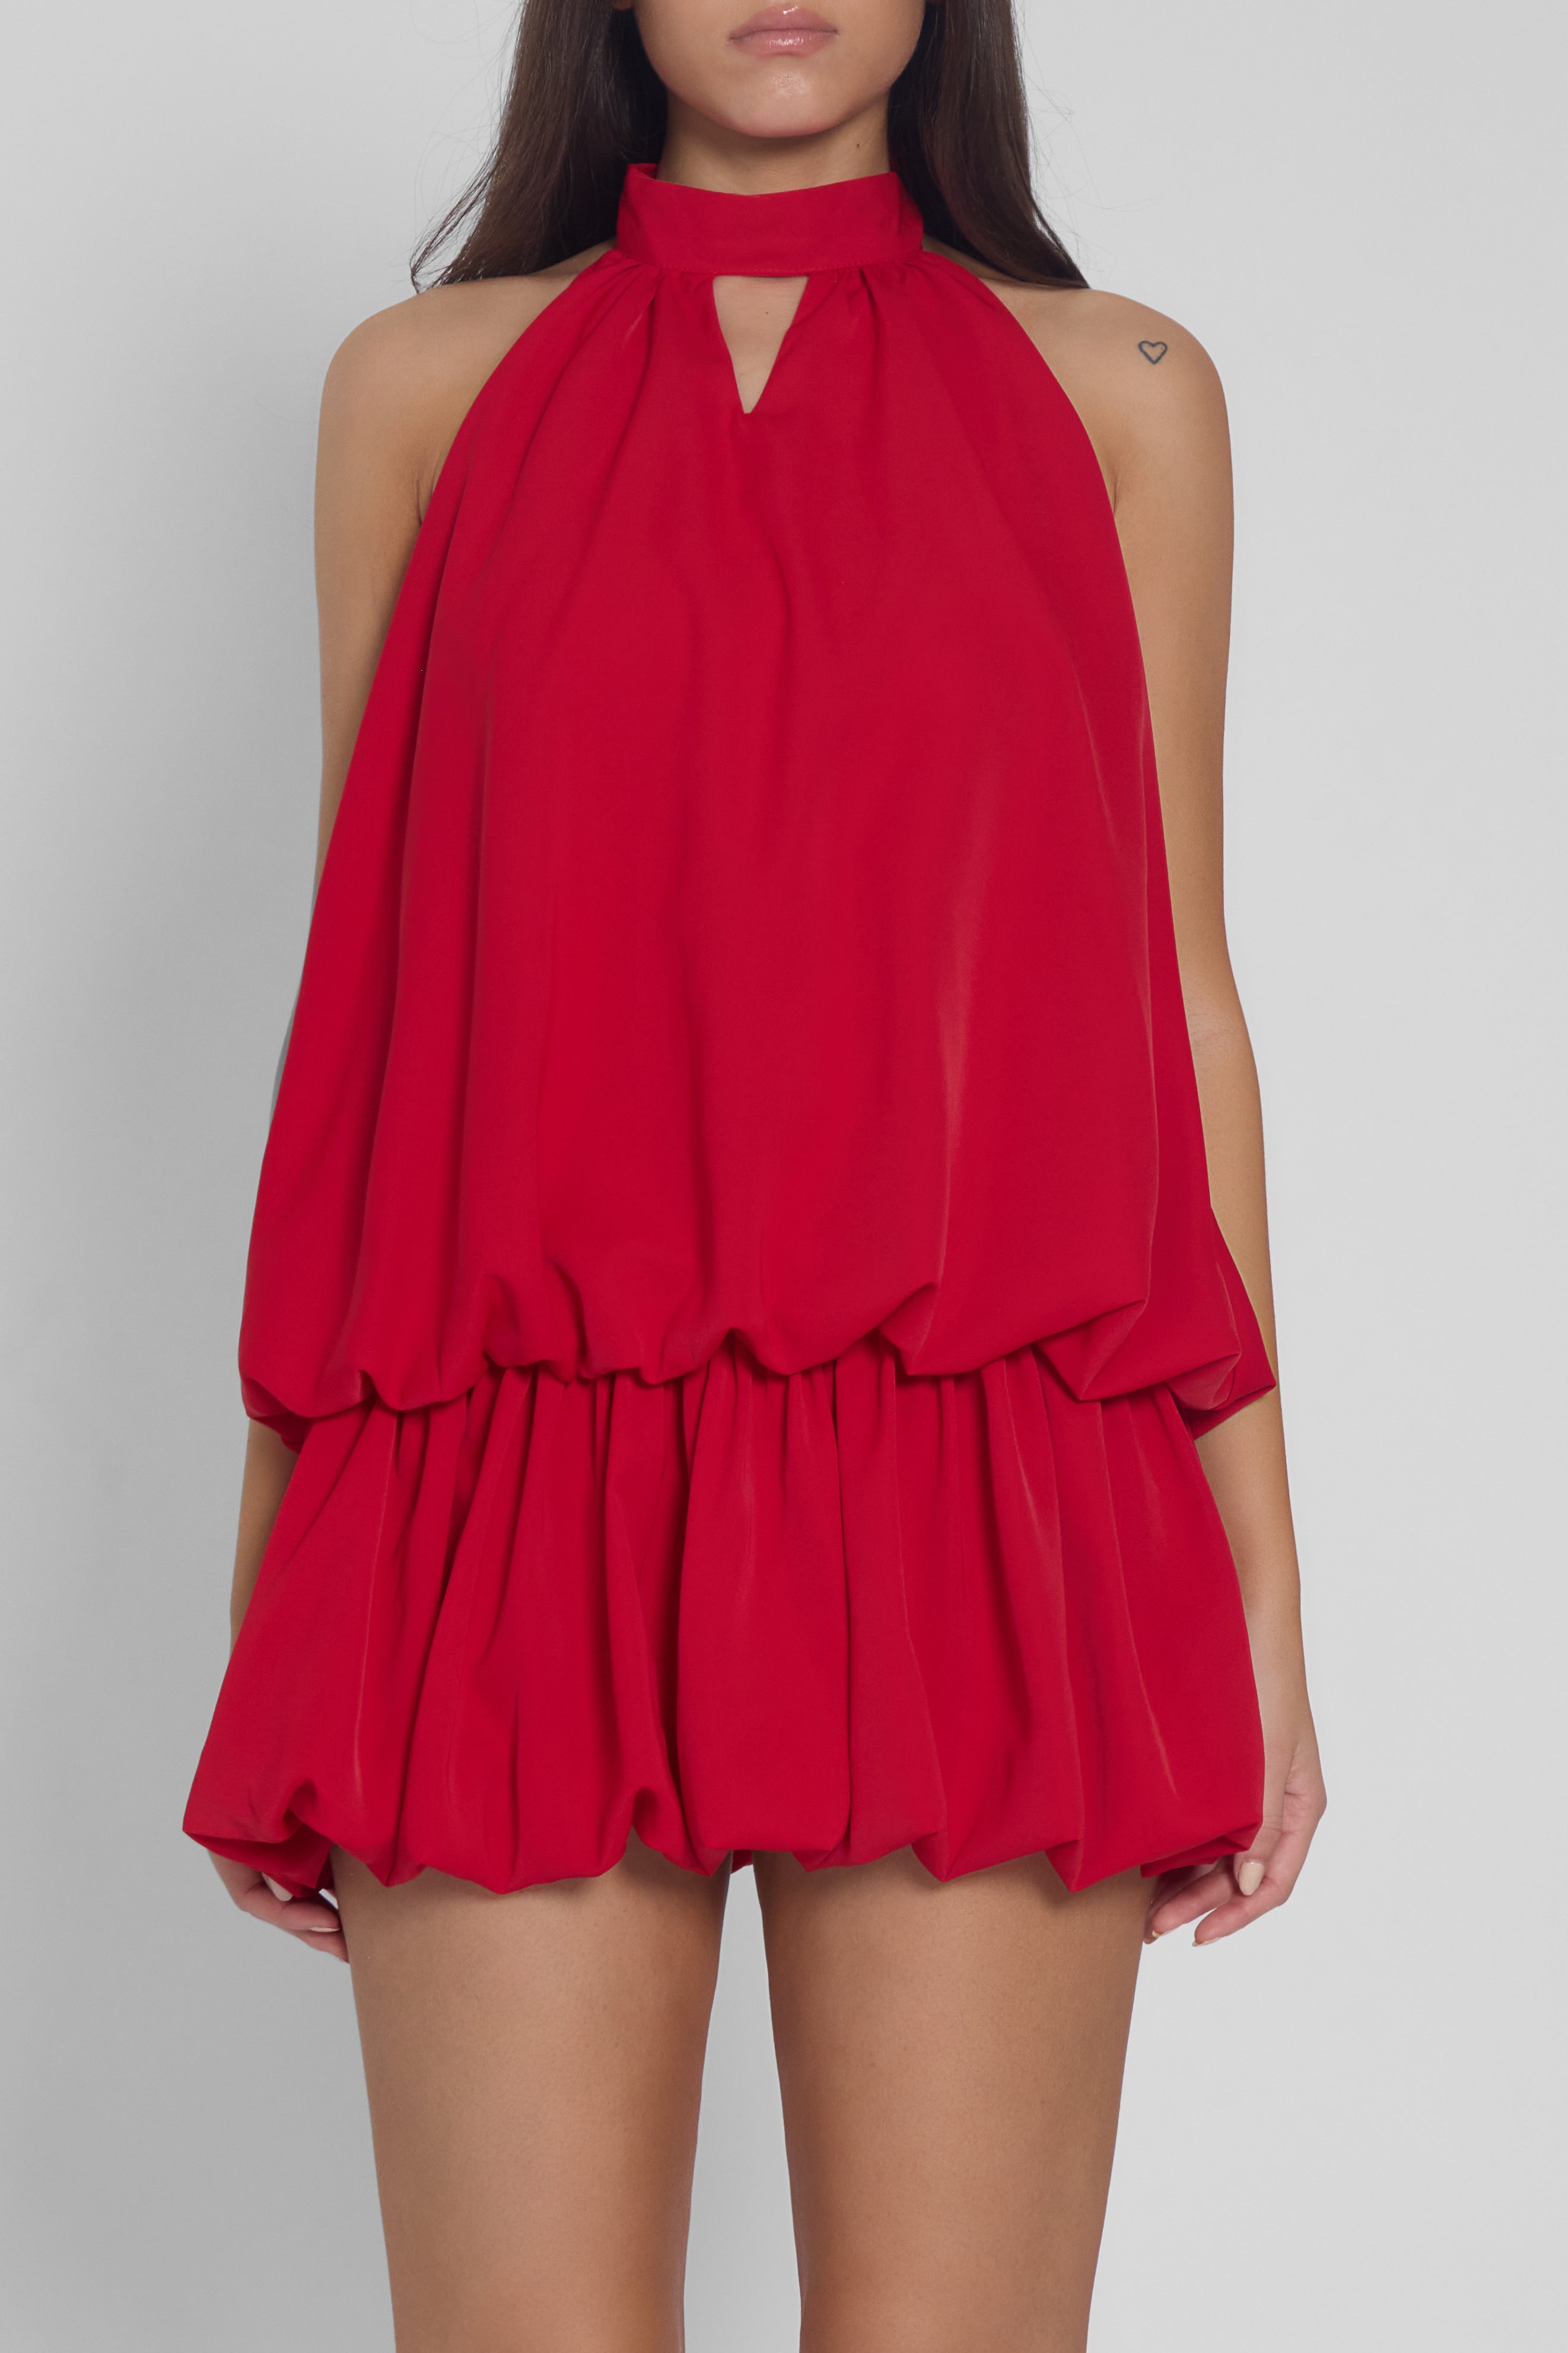 Cherry Bubble Mini Dress - Red.